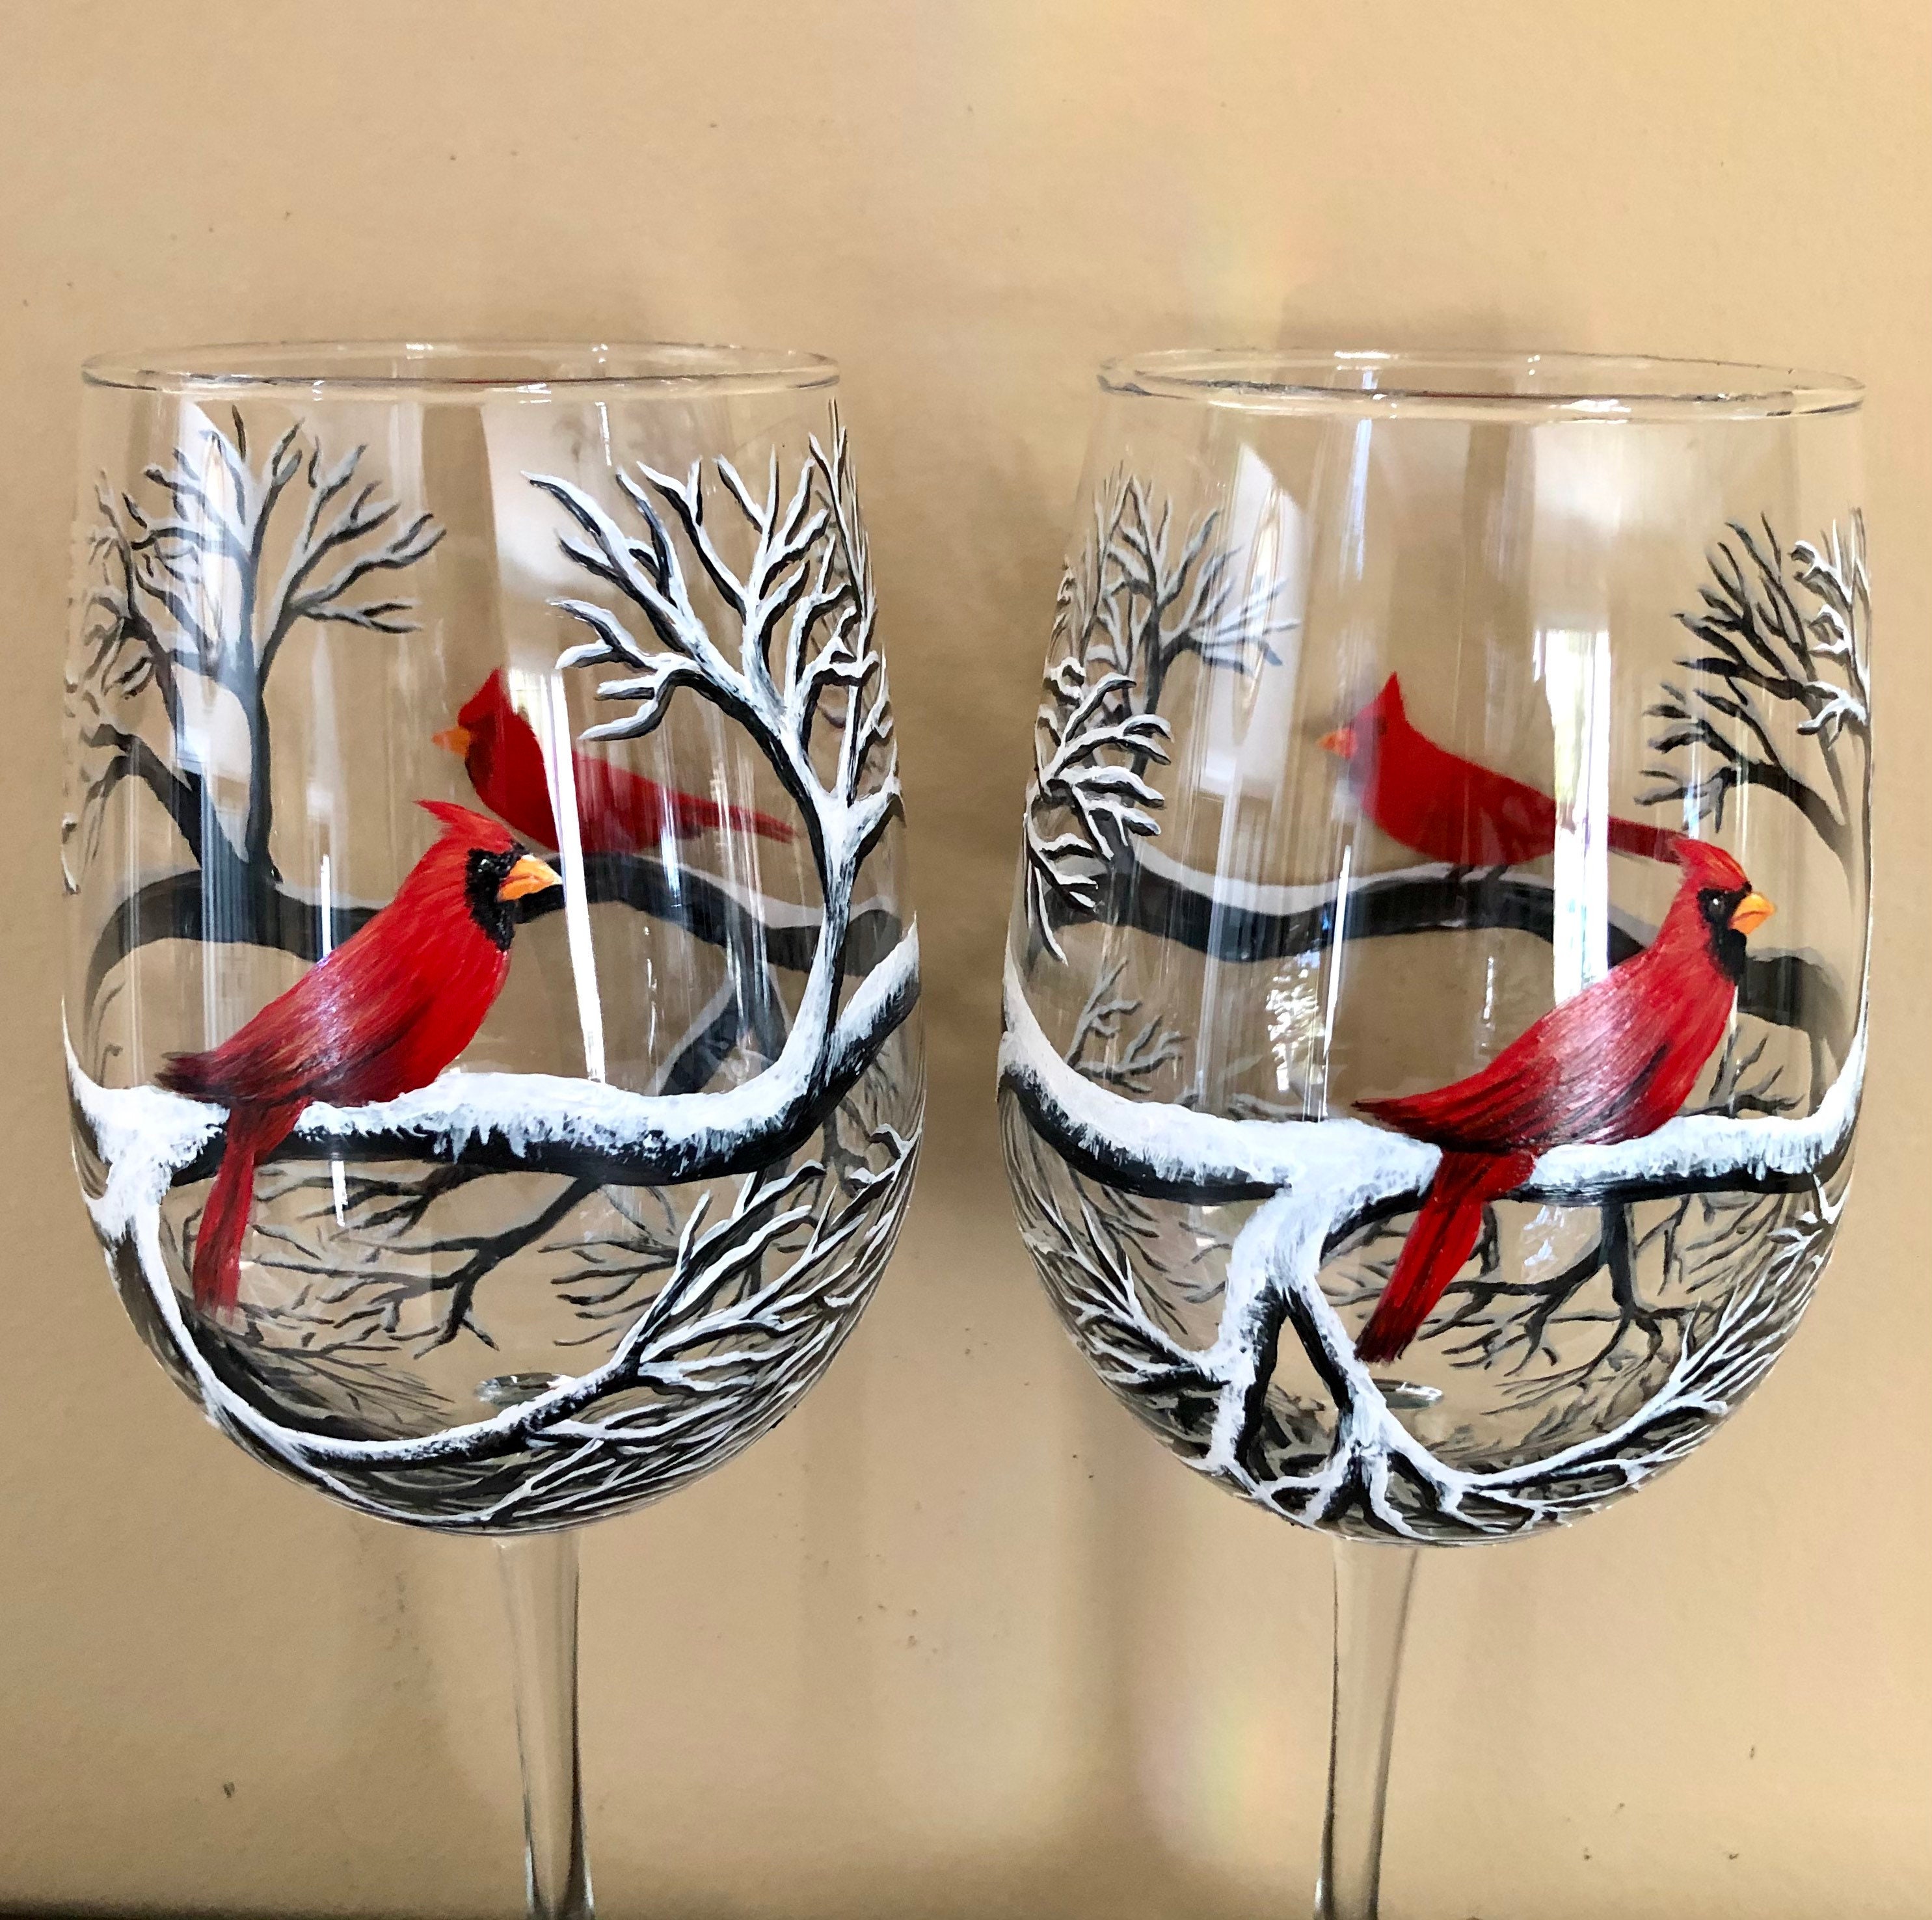 louisville cardinals wine glasses